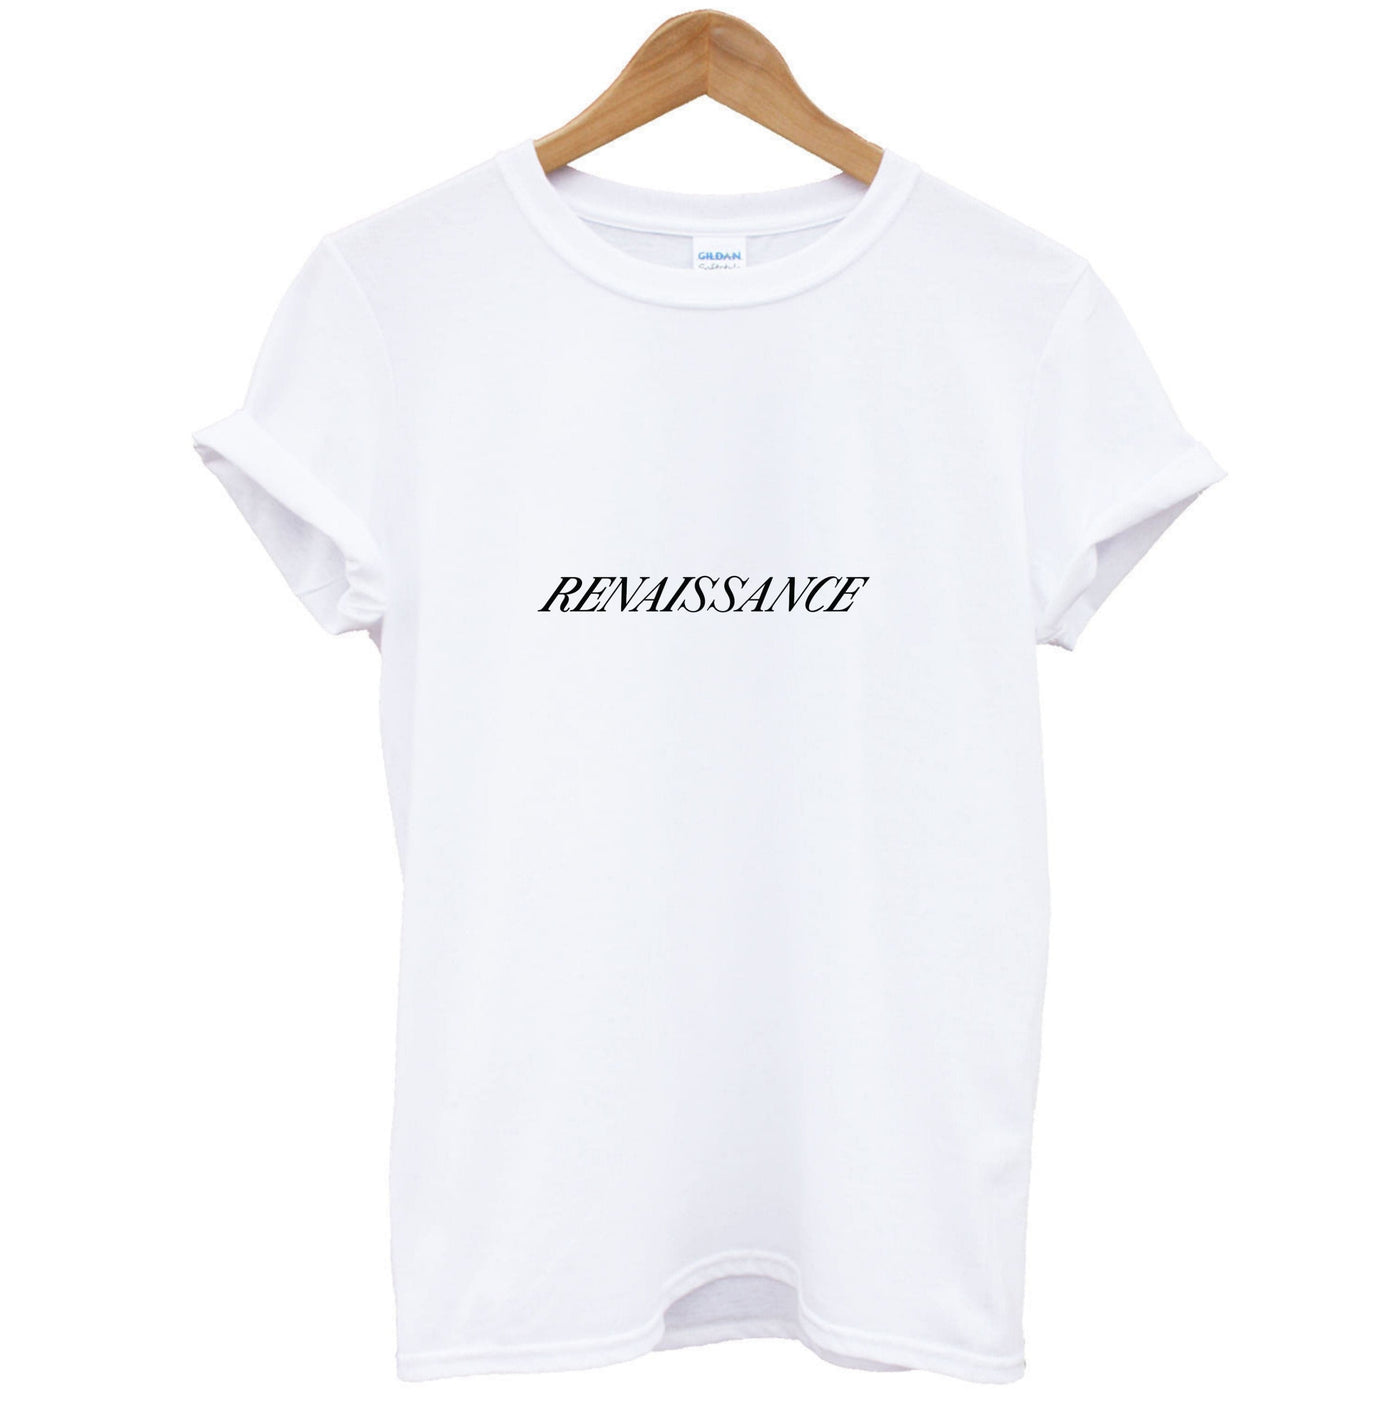 Renaissance - Beyonce T-Shirt